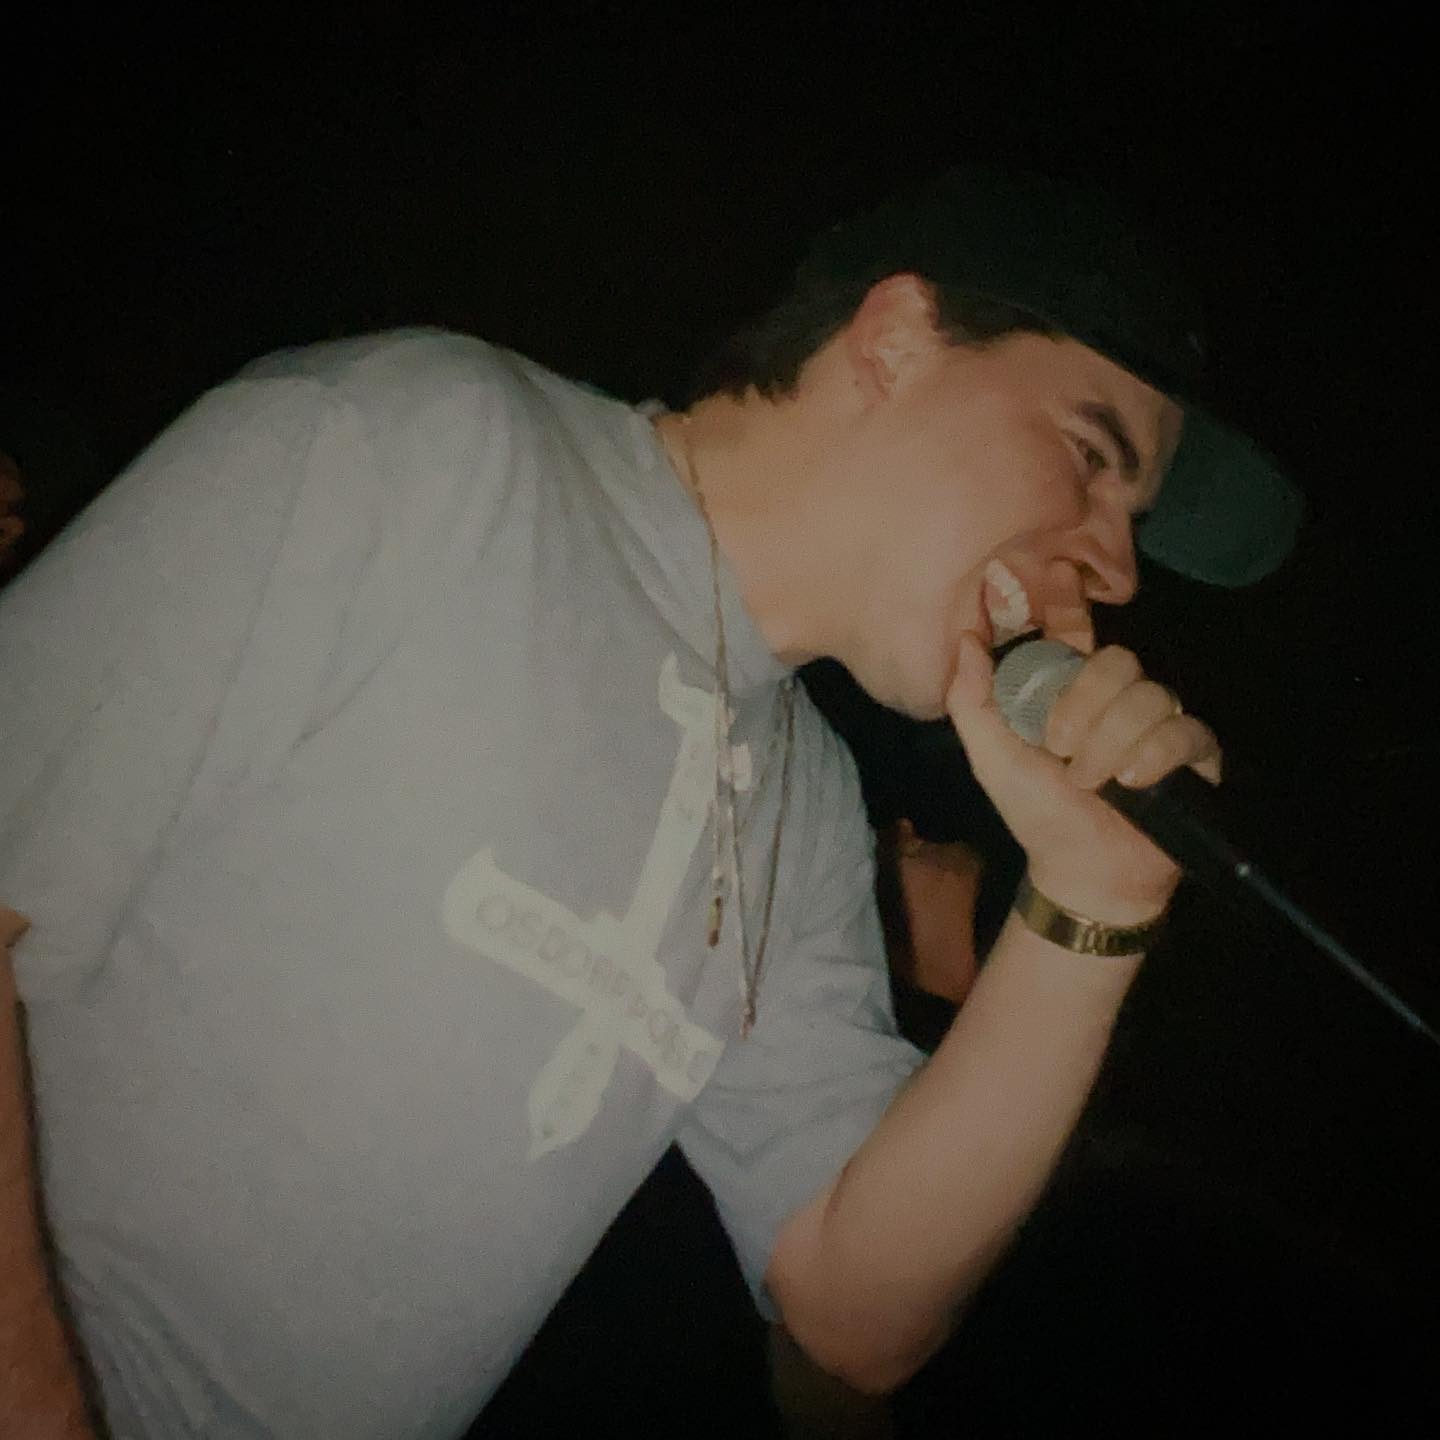 Osdorp Posse - Struik Heino - 2 March 1996 #hiphop @osdorpposseshop 📸 by @twentylandcrew